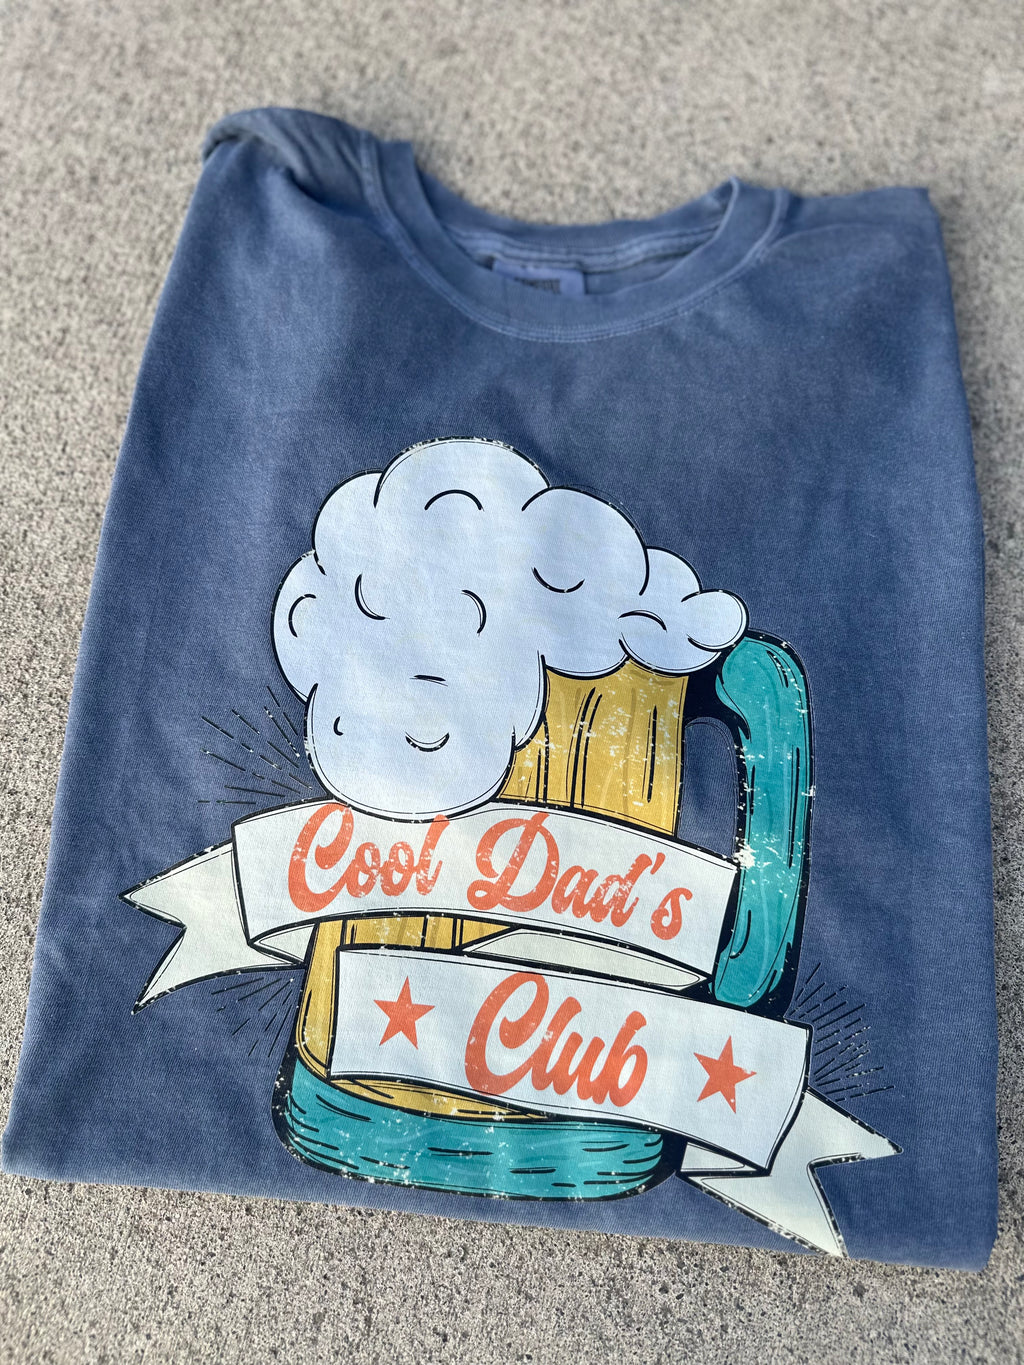 Cool dad’s club